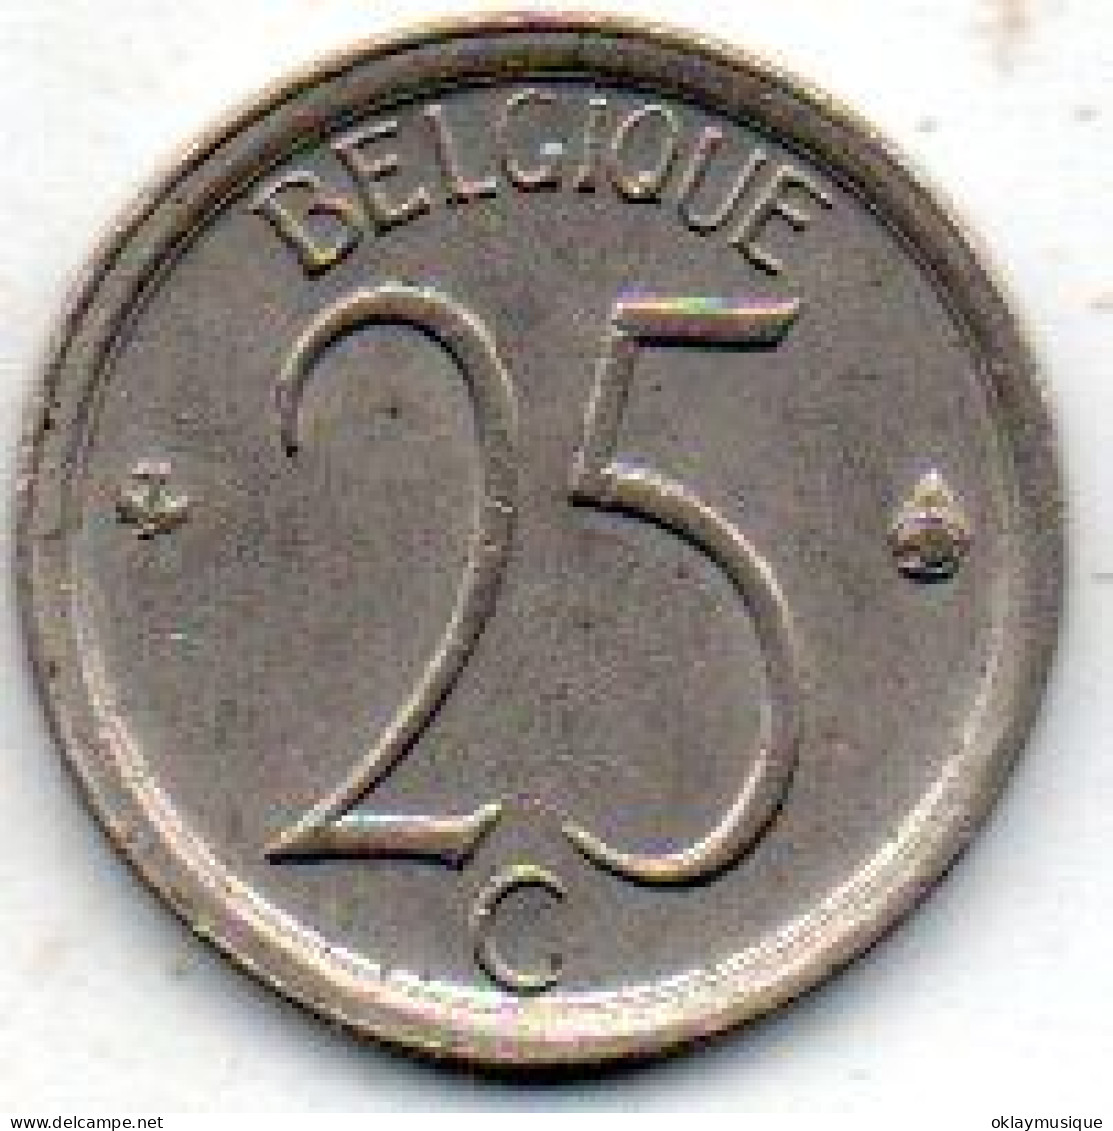 25 Centimes 1975 - 25 Cents